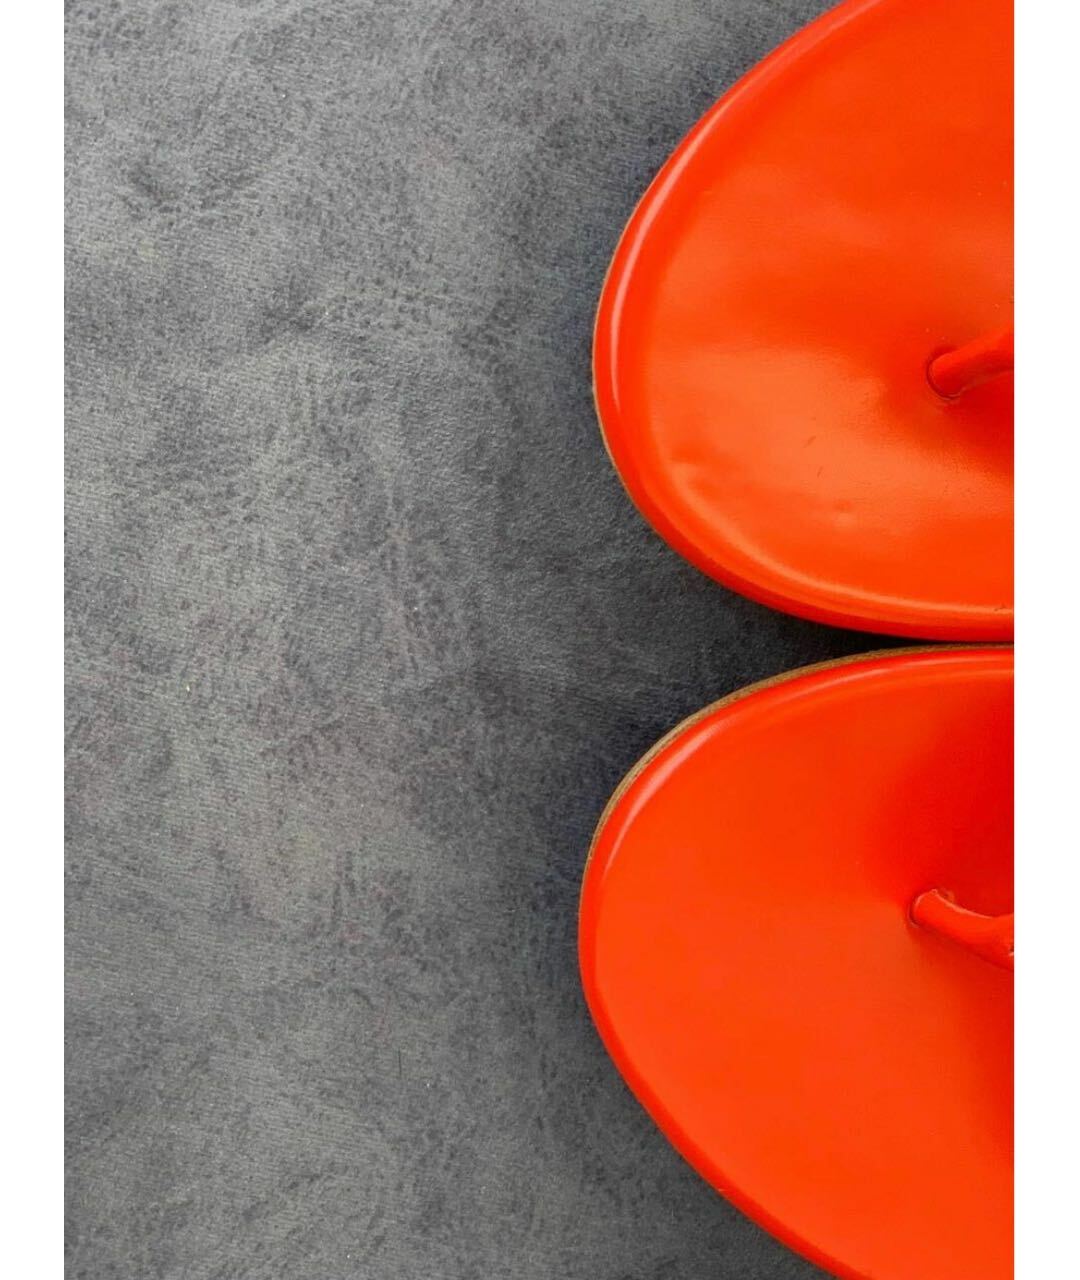 CHANEL PRE-OWNED Красные кожаные сандалии, фото 3